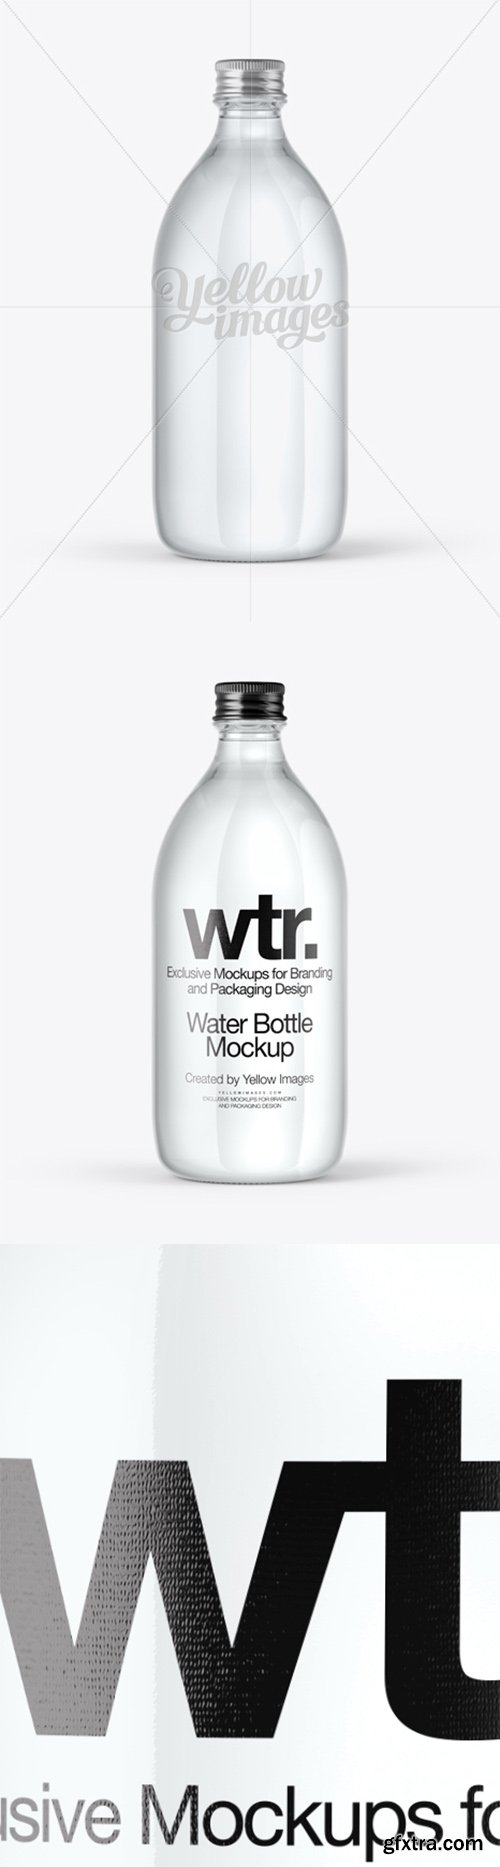 Clear Glass Water Bottle Mockup 14371 Gfxtra